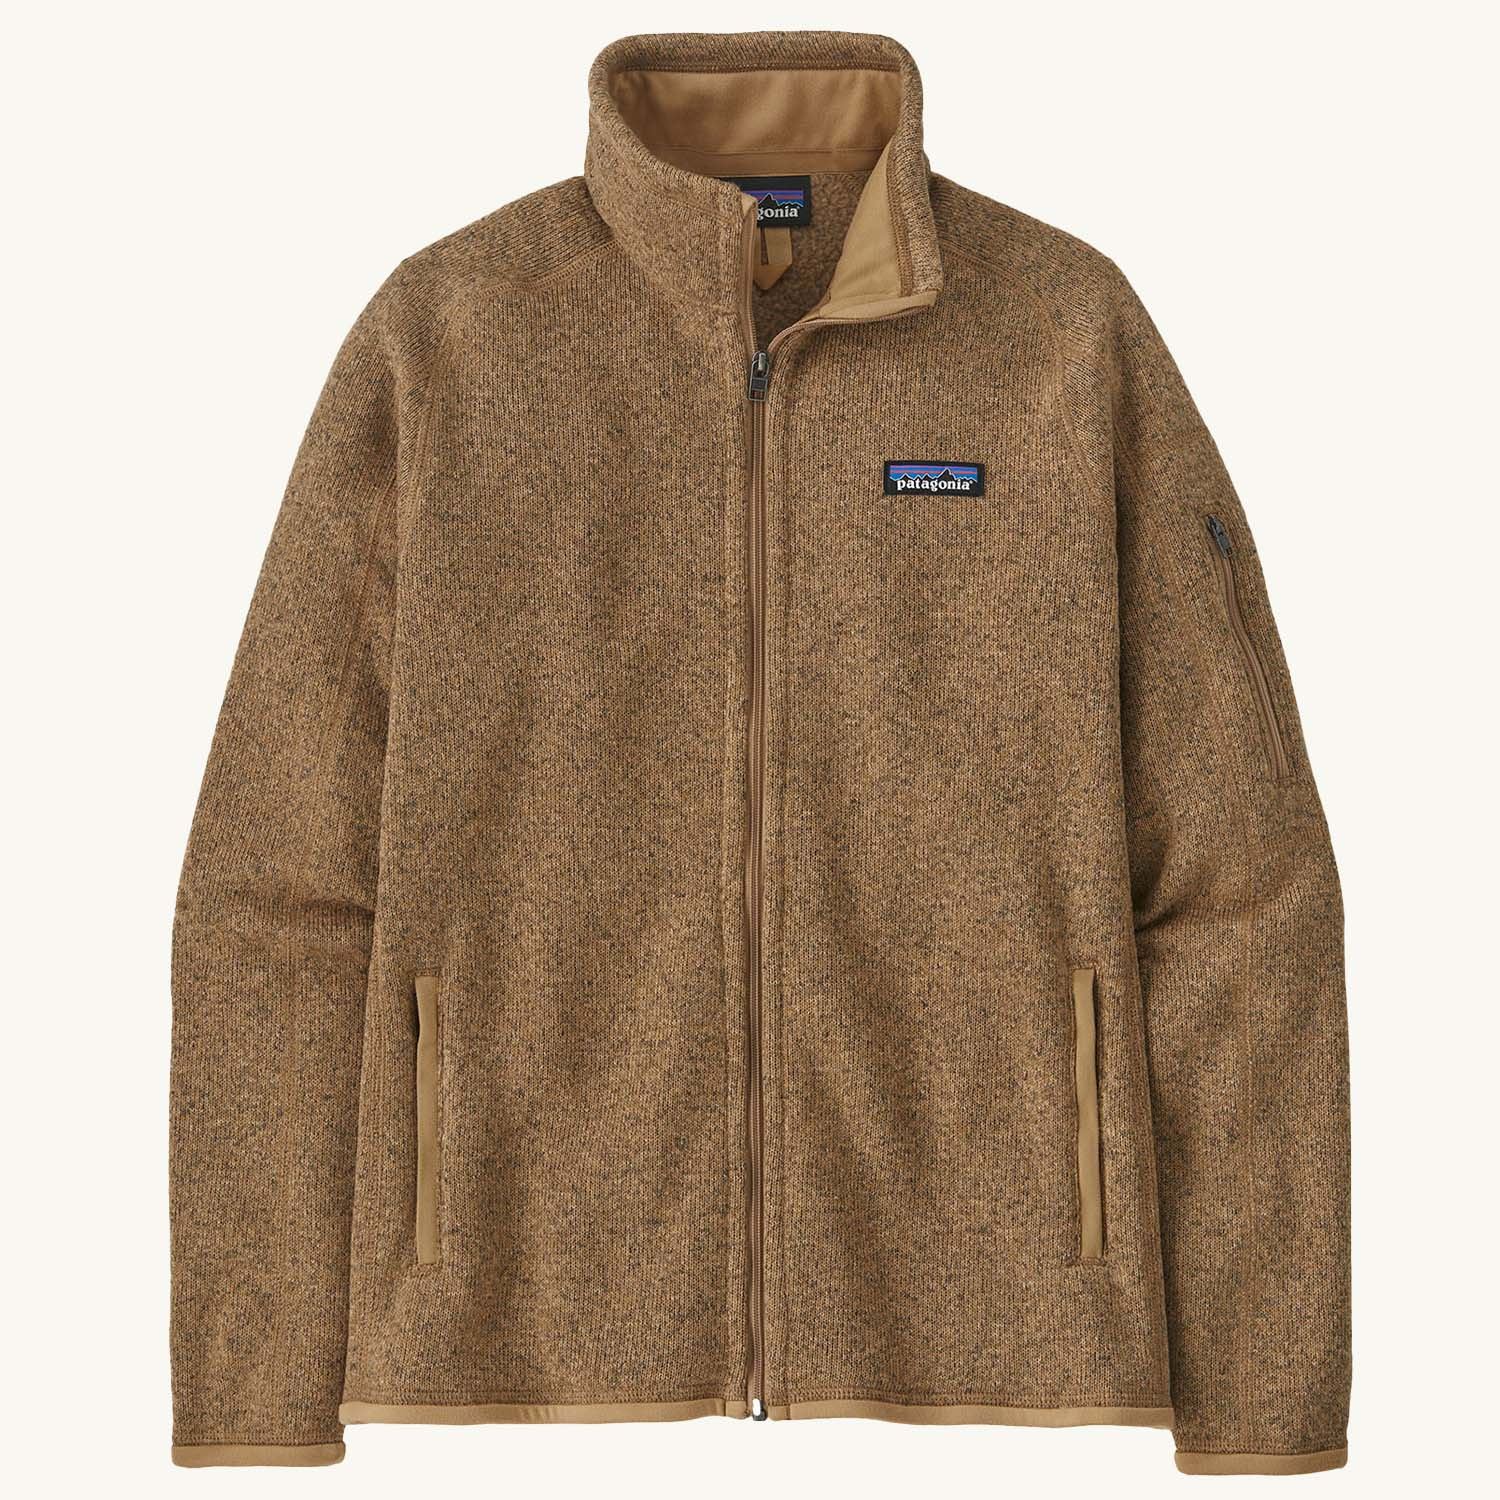 Patagonia Women's Better Sweater Fleece Jacket - Grayling Brown